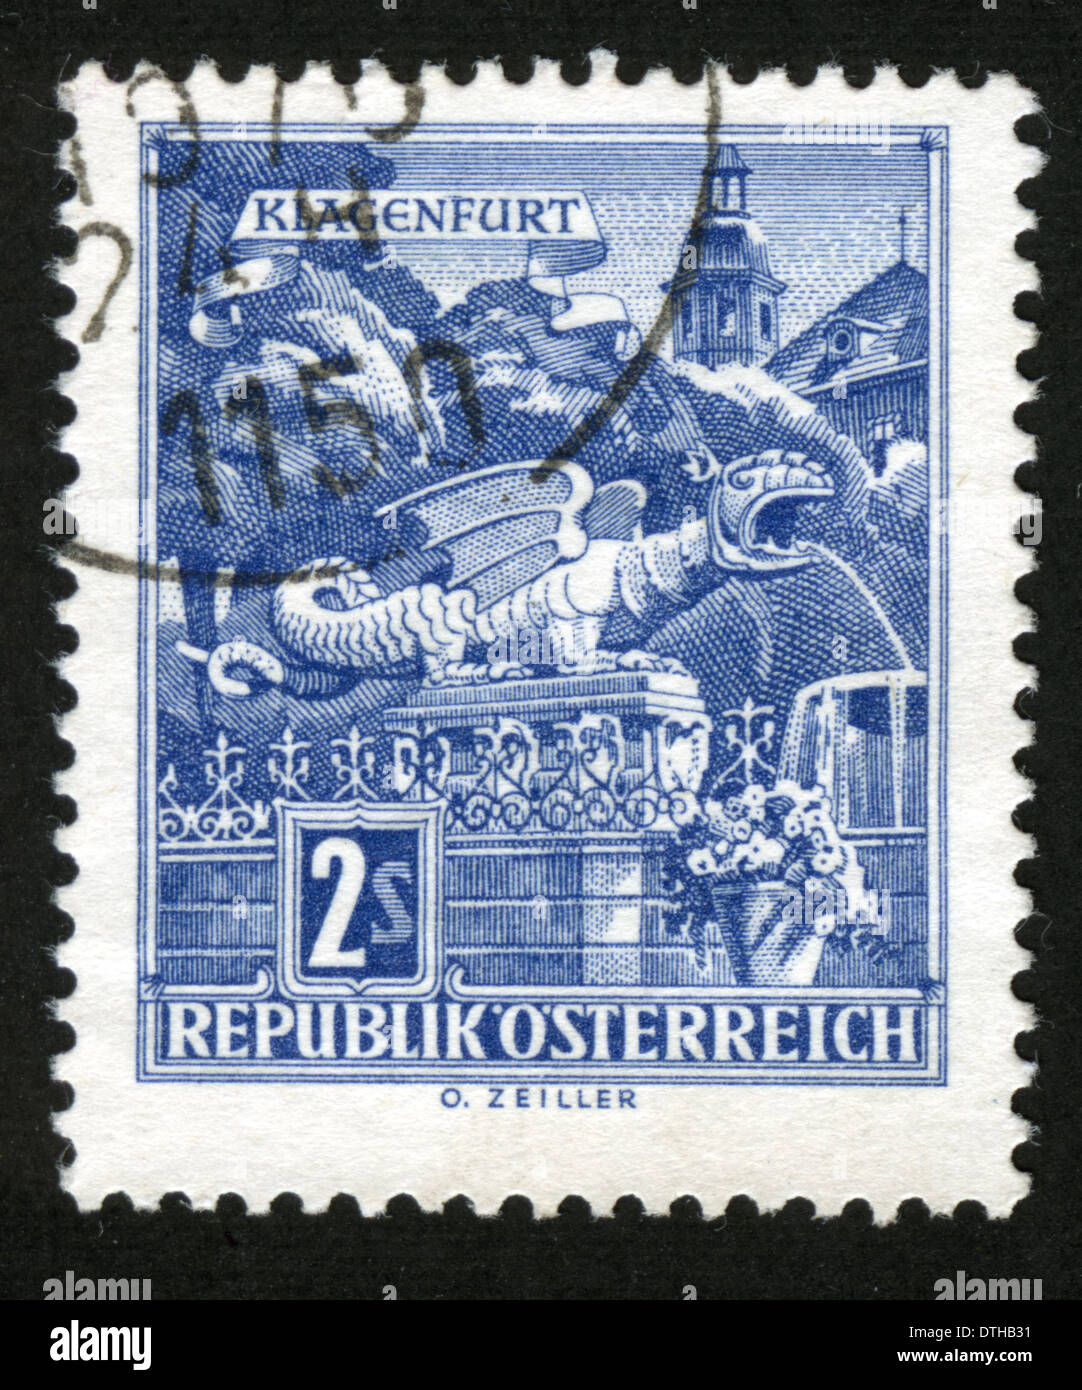 Klagenfurt, capital of Carinthia, postage stamp, Austria Stock Photo